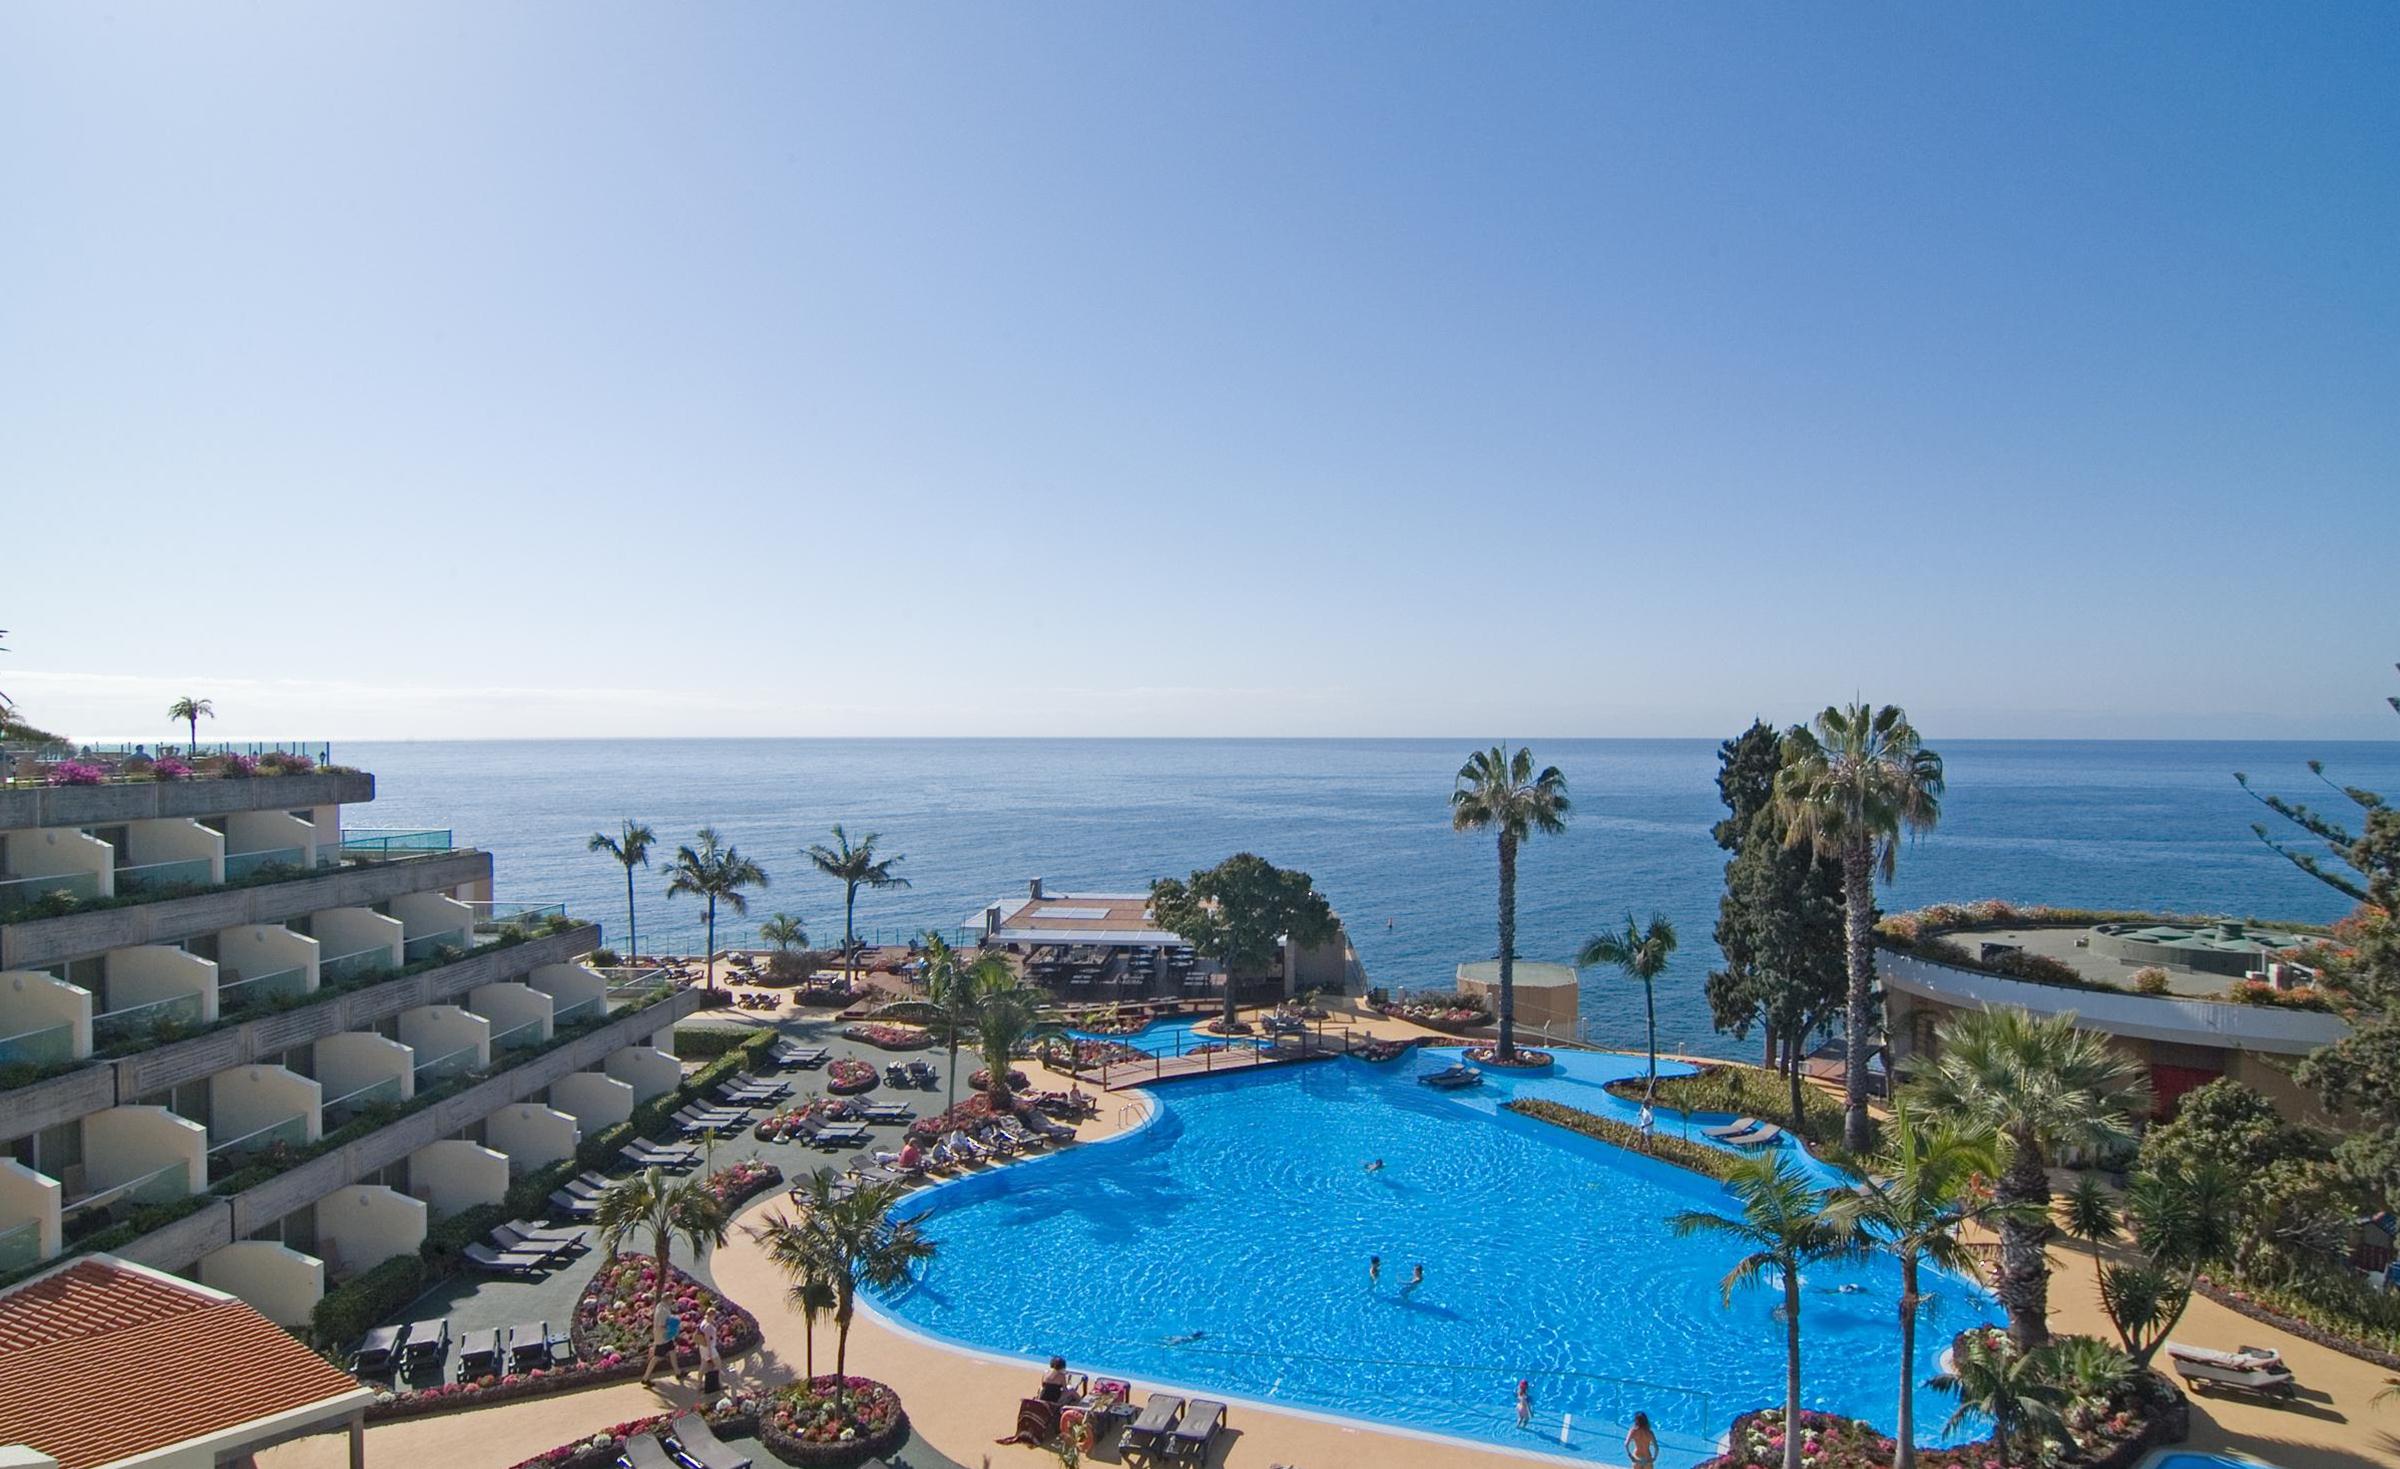 Pestana Carlton Madeira - Premium Ocean Resort, Funchal, Madeira, Portugal